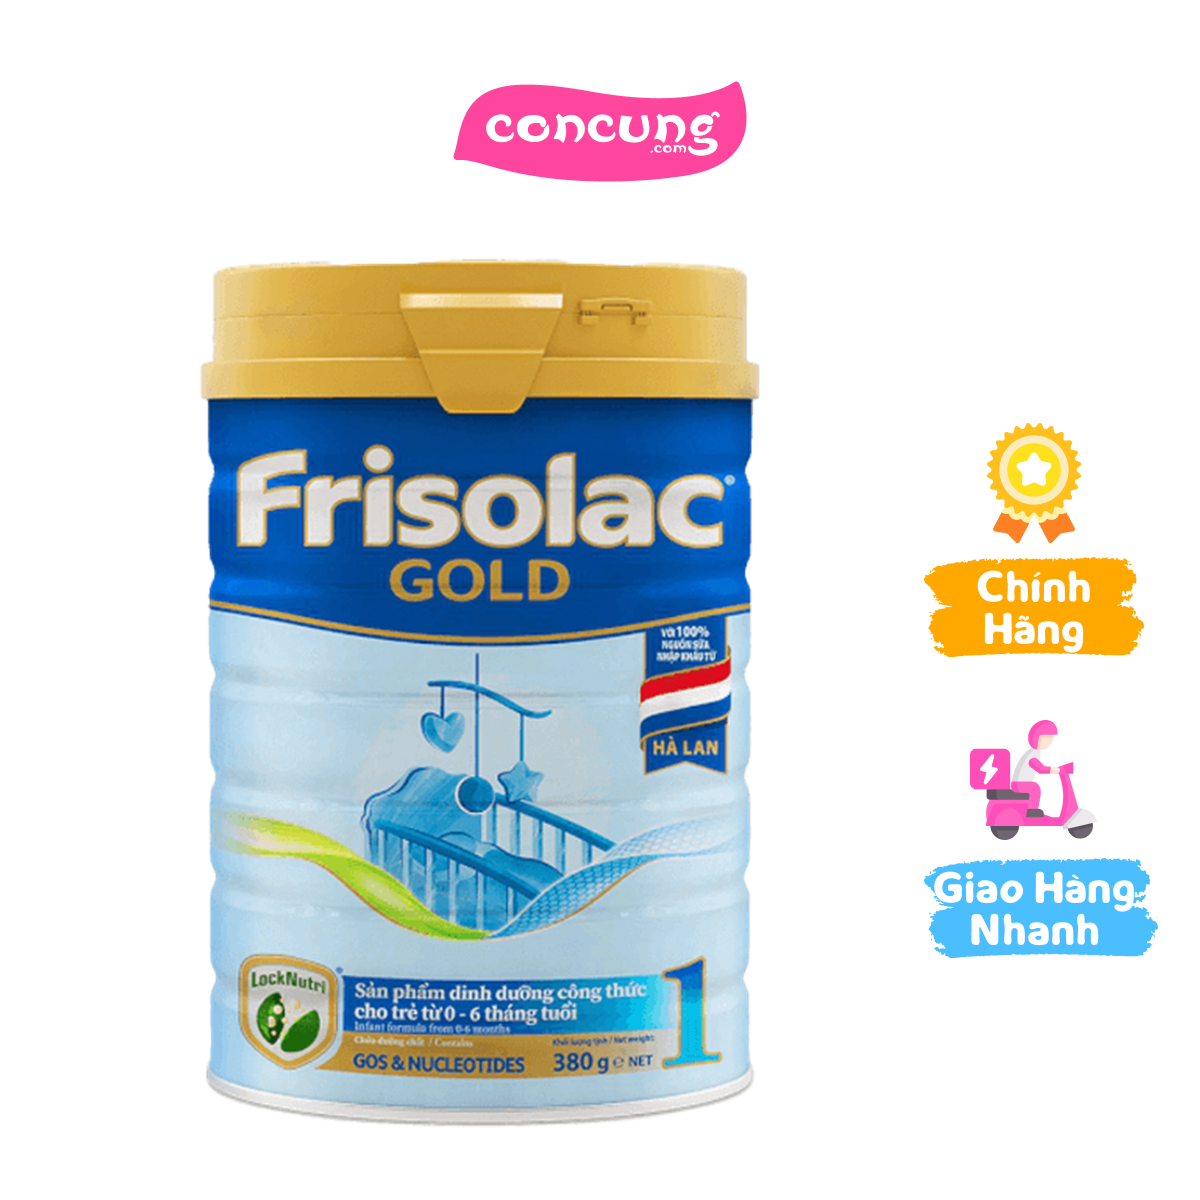 Frisolac Gold 1, 0 - 6 tháng tuổi 380gr